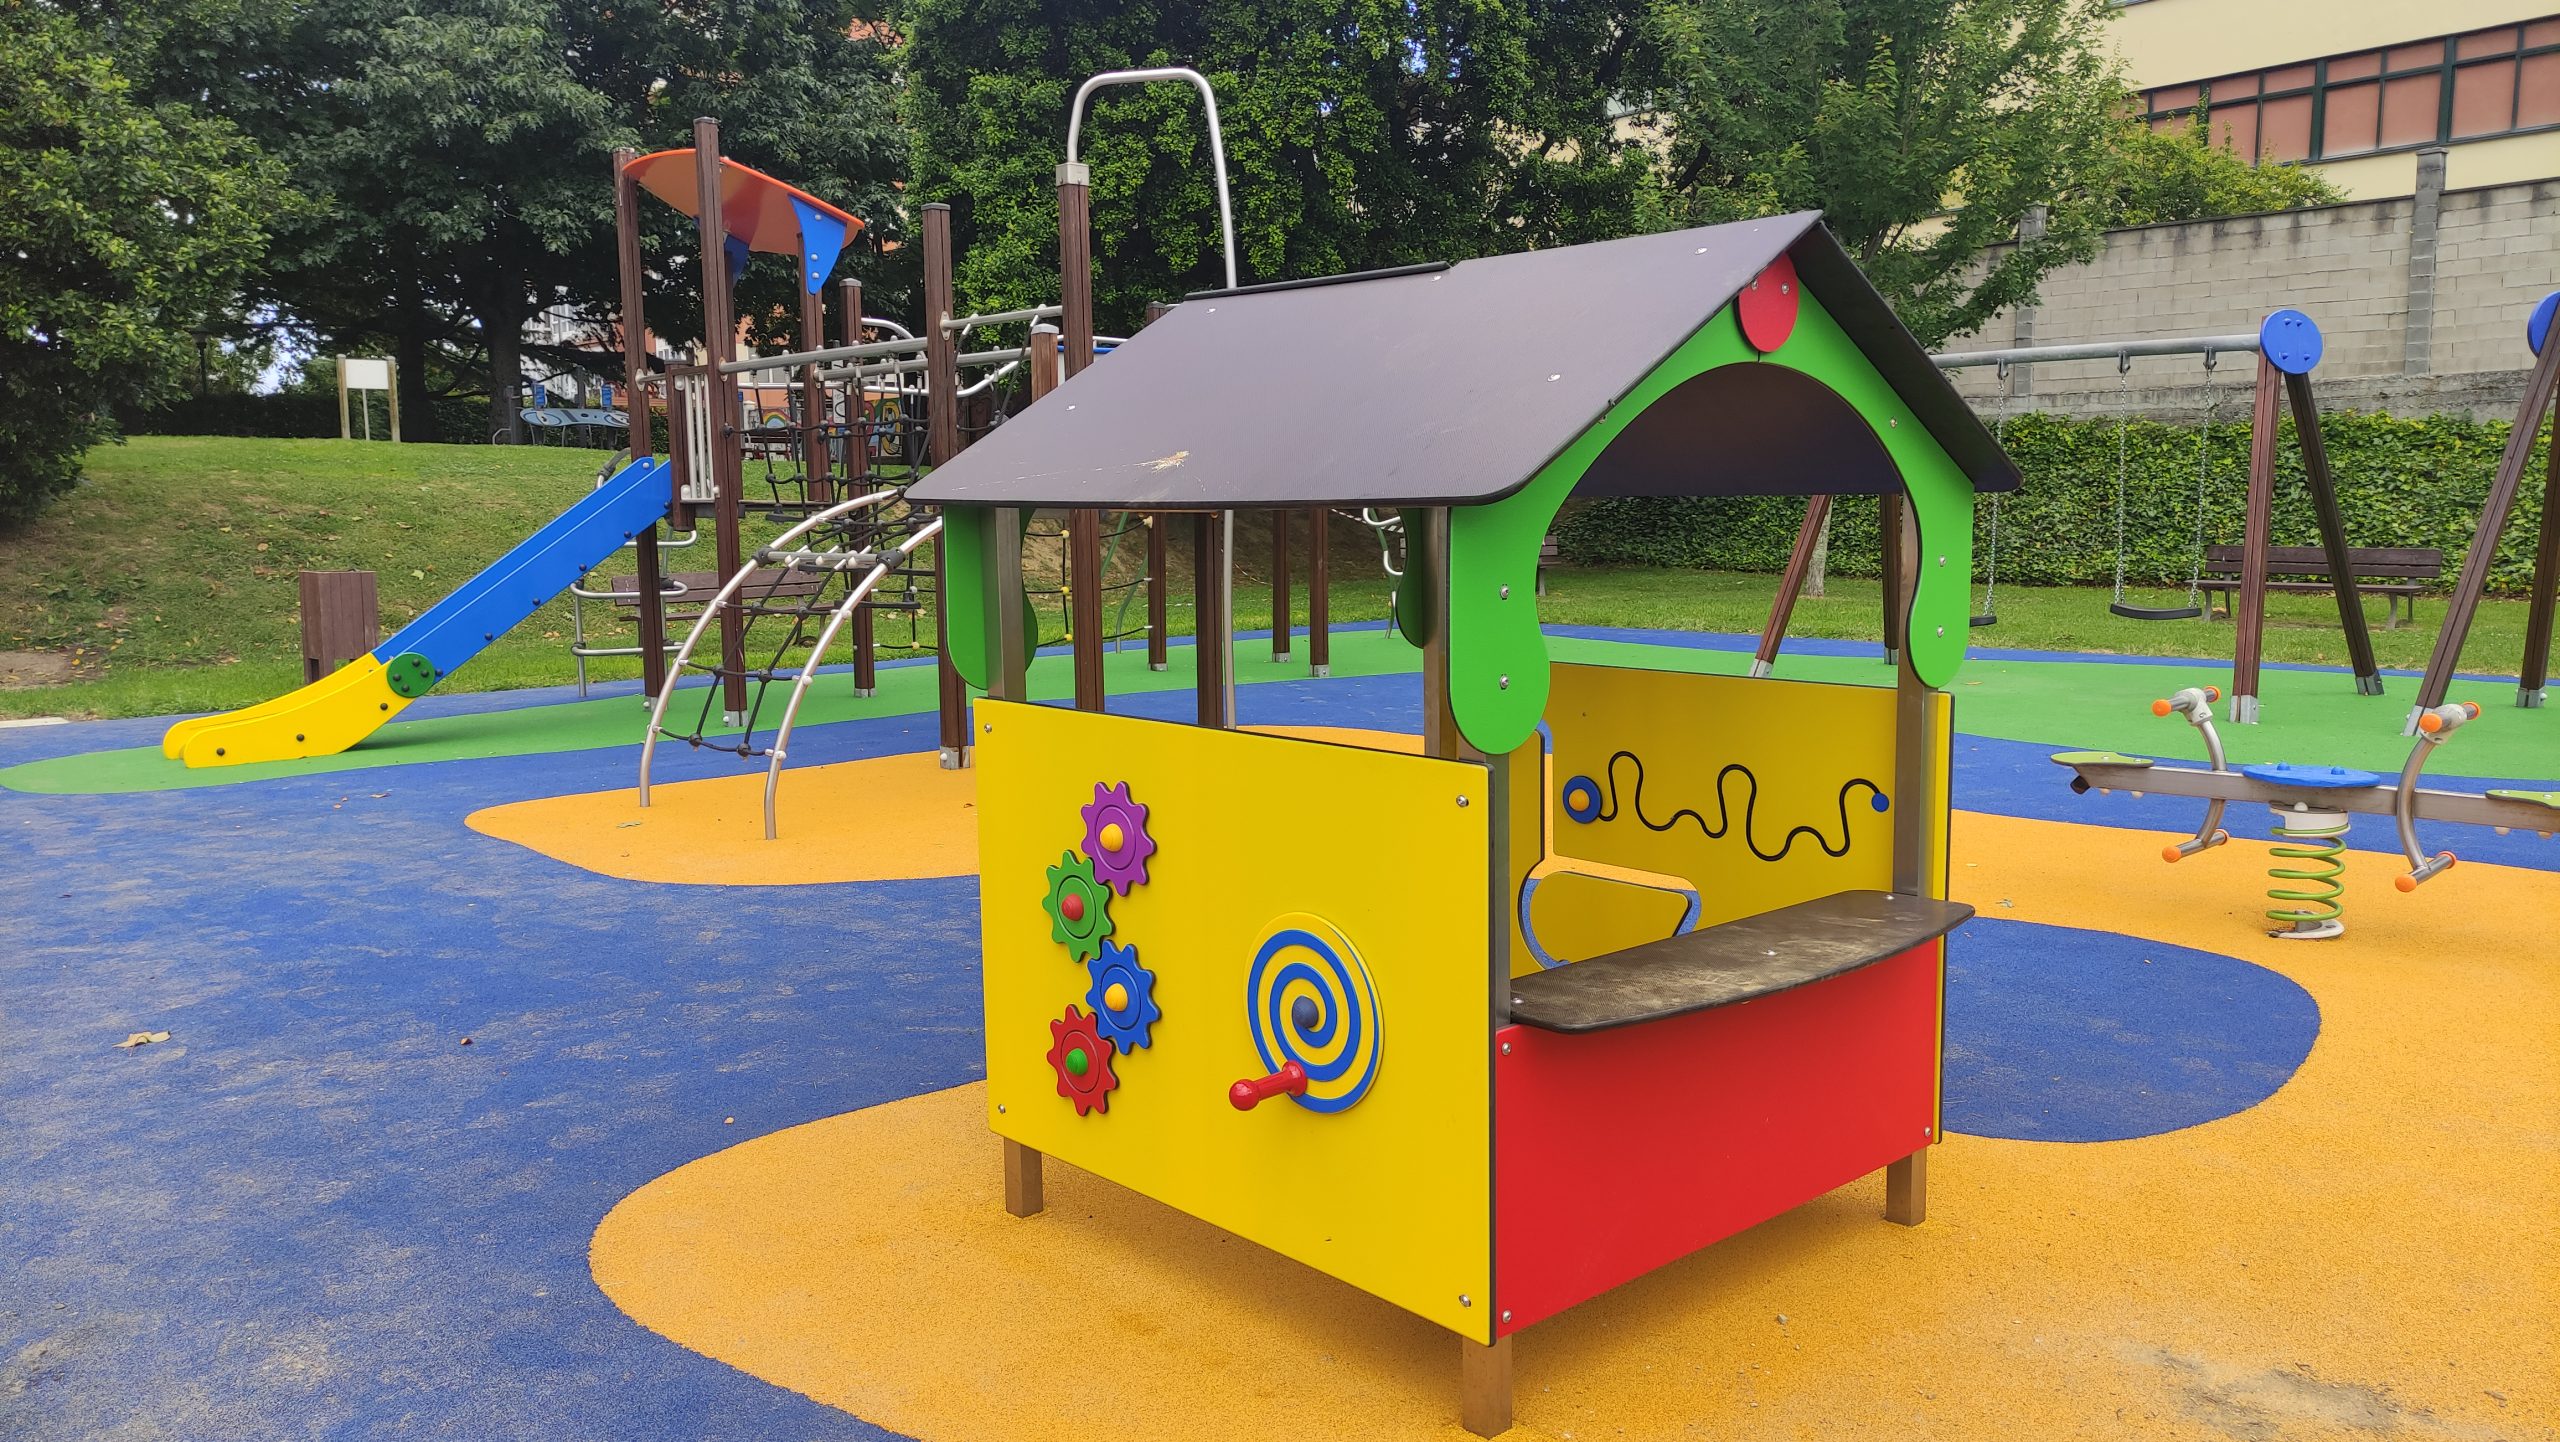 Renovado el parque infantil de la calle Juan de Austria en Caranza